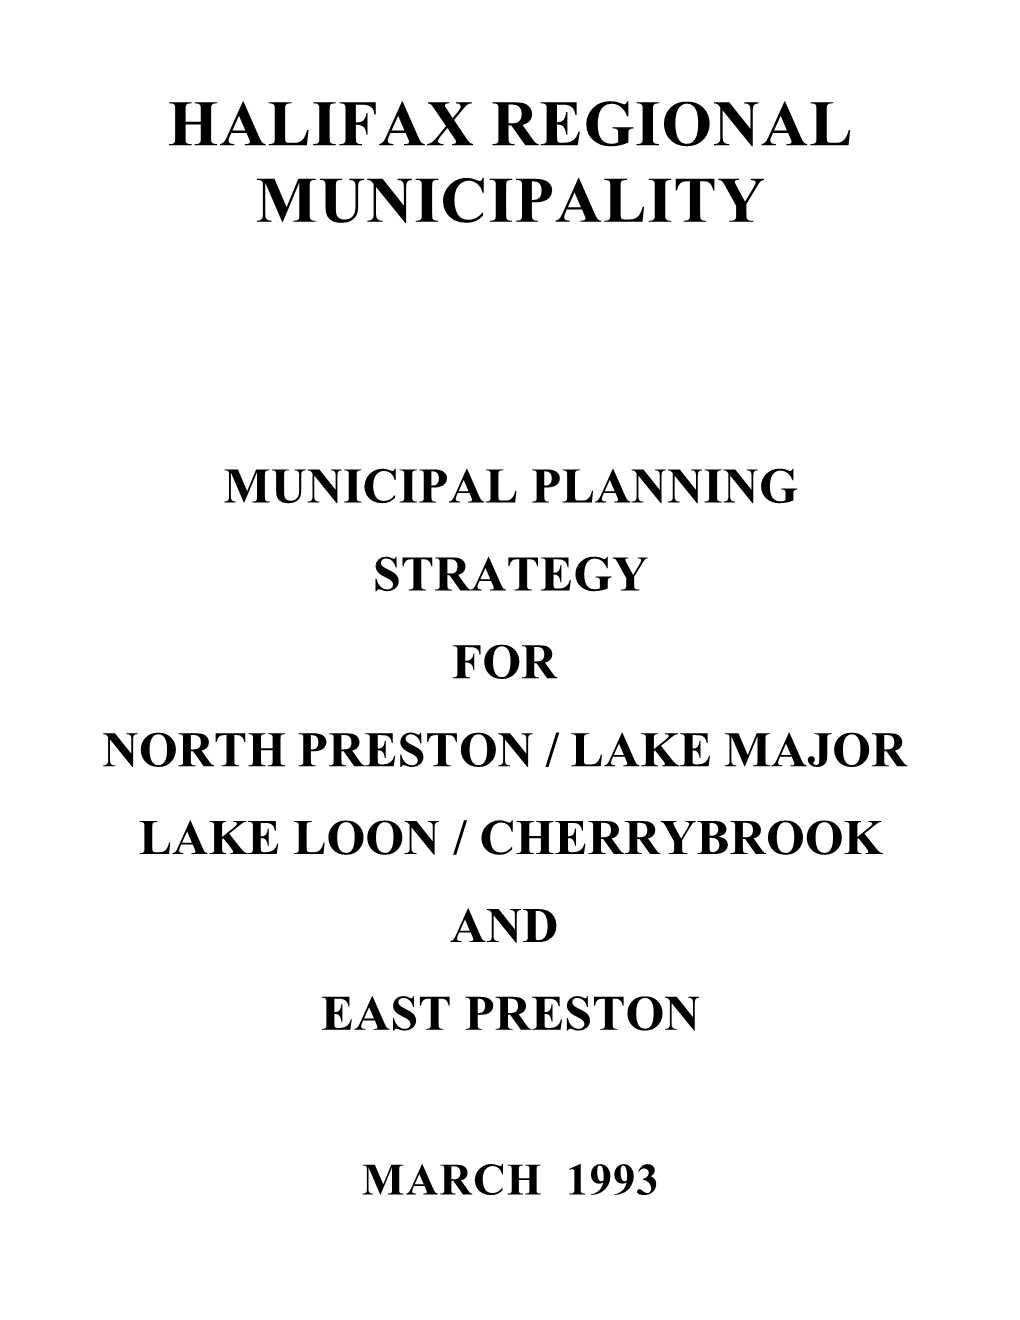 Municipal Planning Strategy for North Preston / Lake Major Lake Loon / Cherrybrook and East Preston